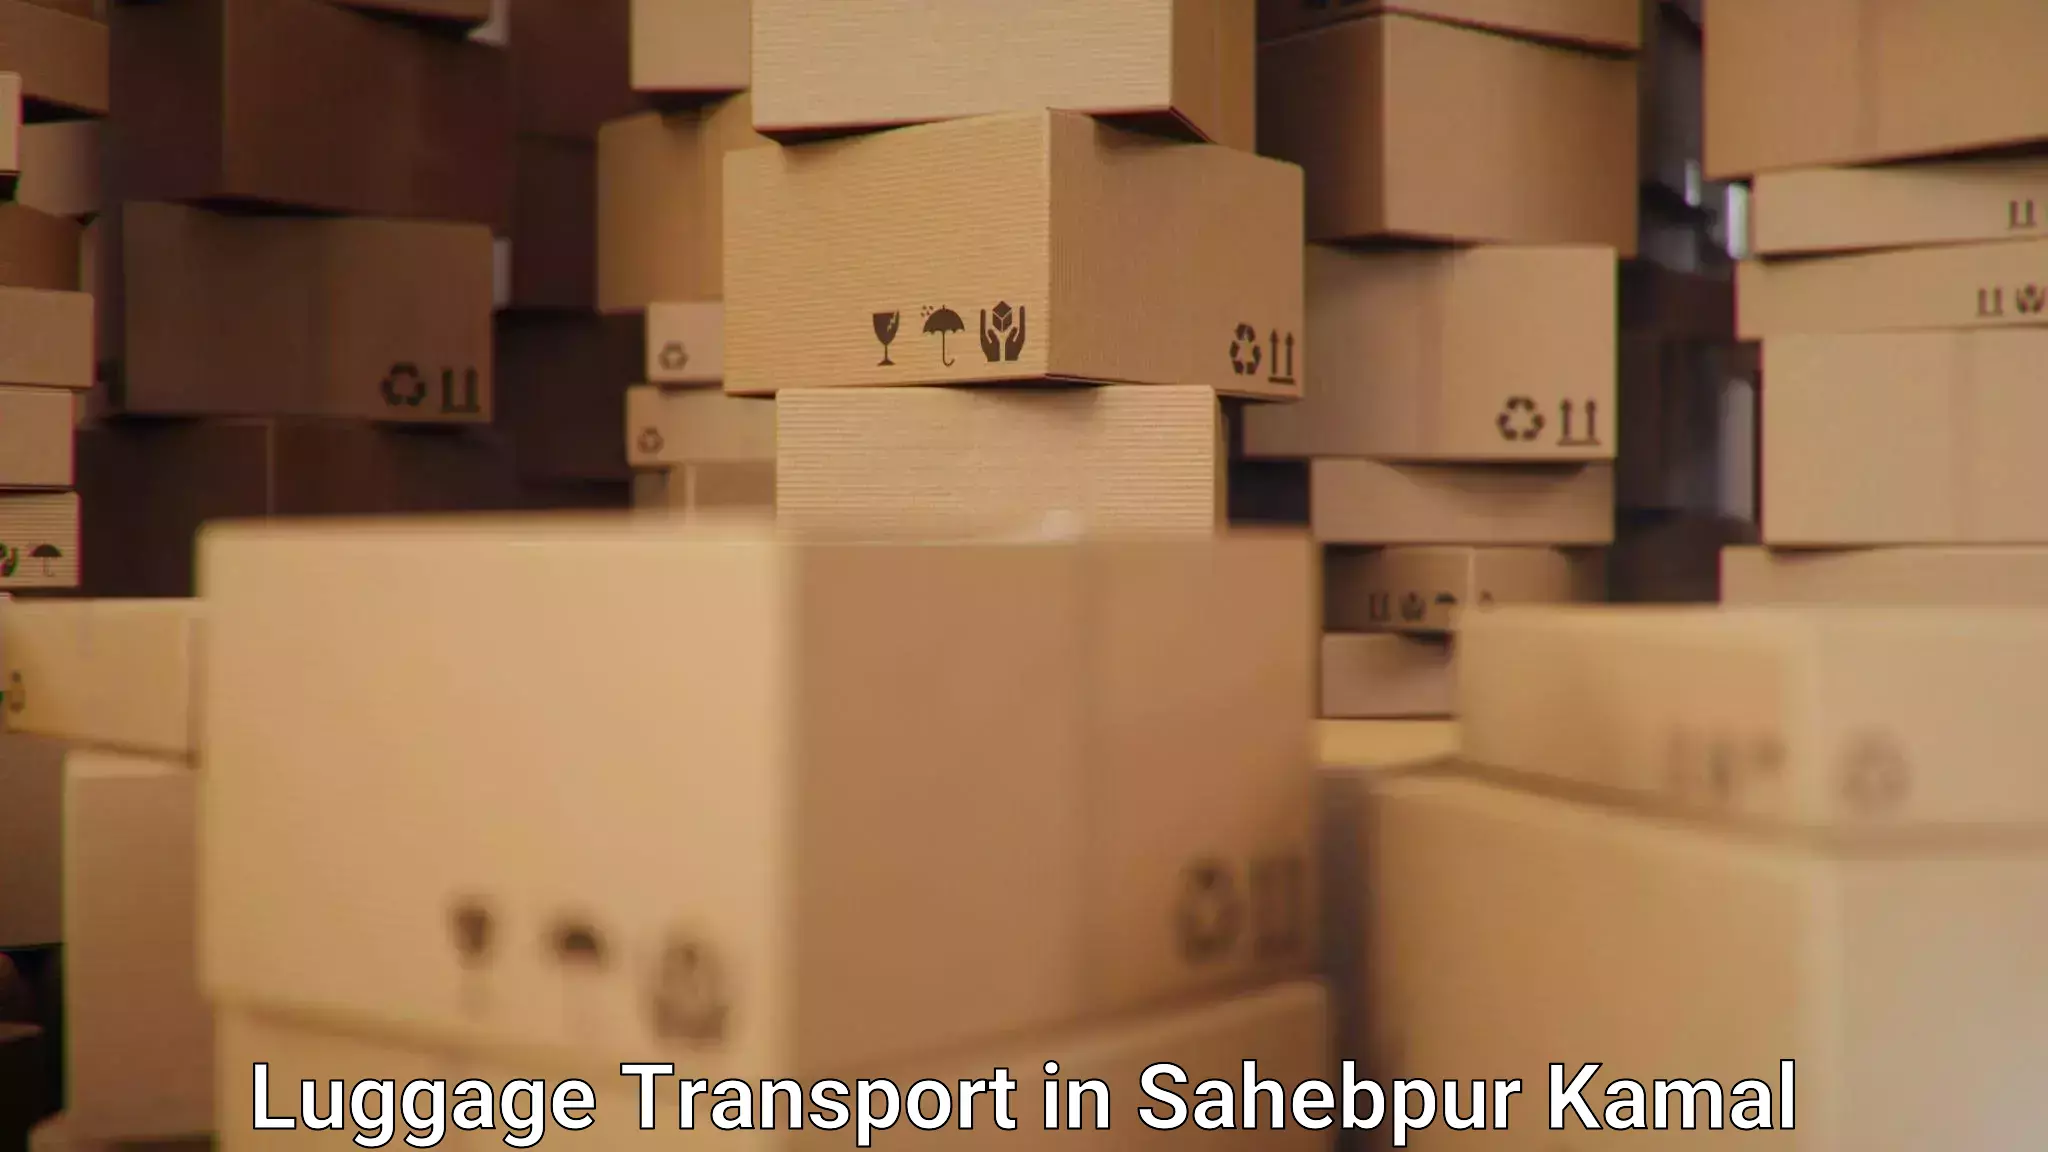 Luggage delivery app in Sahebpur Kamal